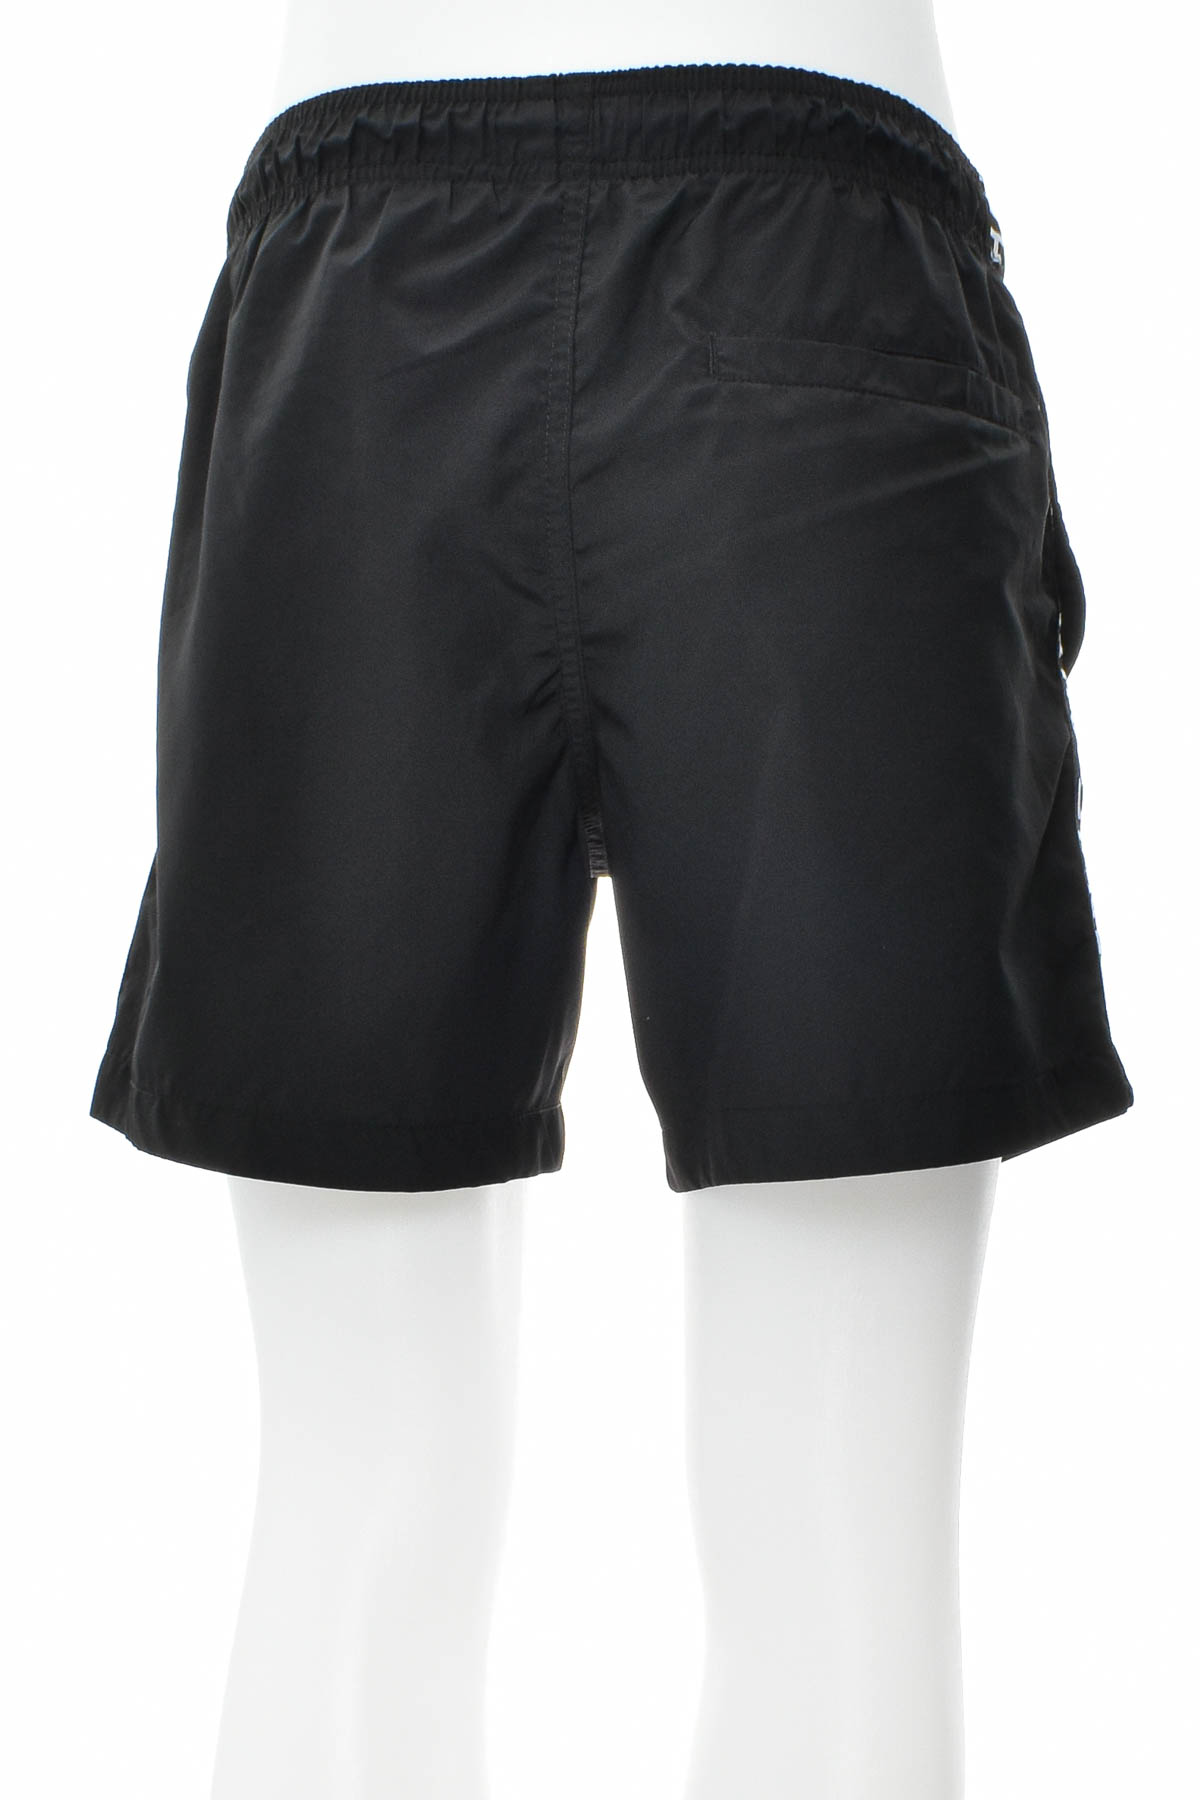 Men's shorts - H&M - 1